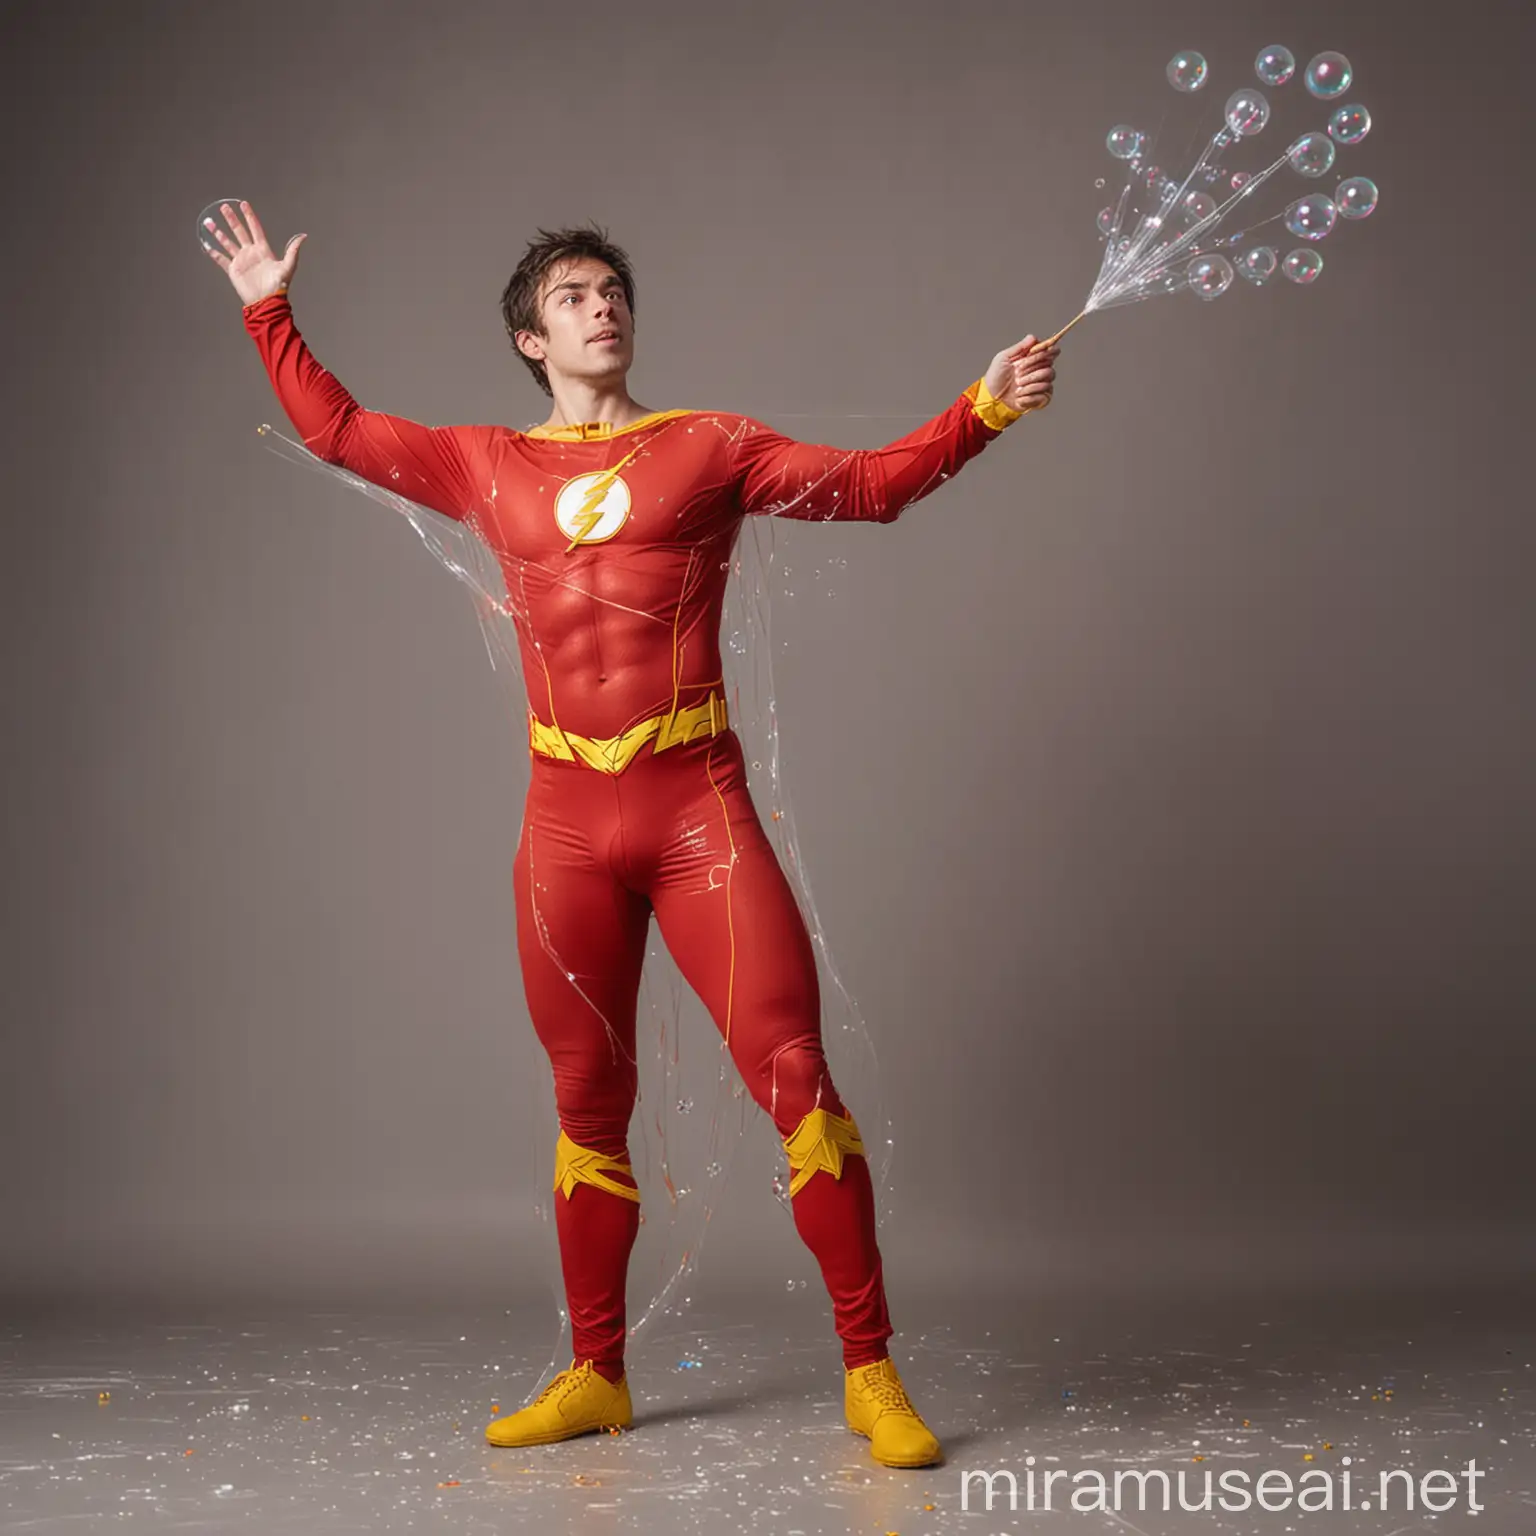 Flash Cosplayer Making Soap Bubbles Energetic Superhero Fun